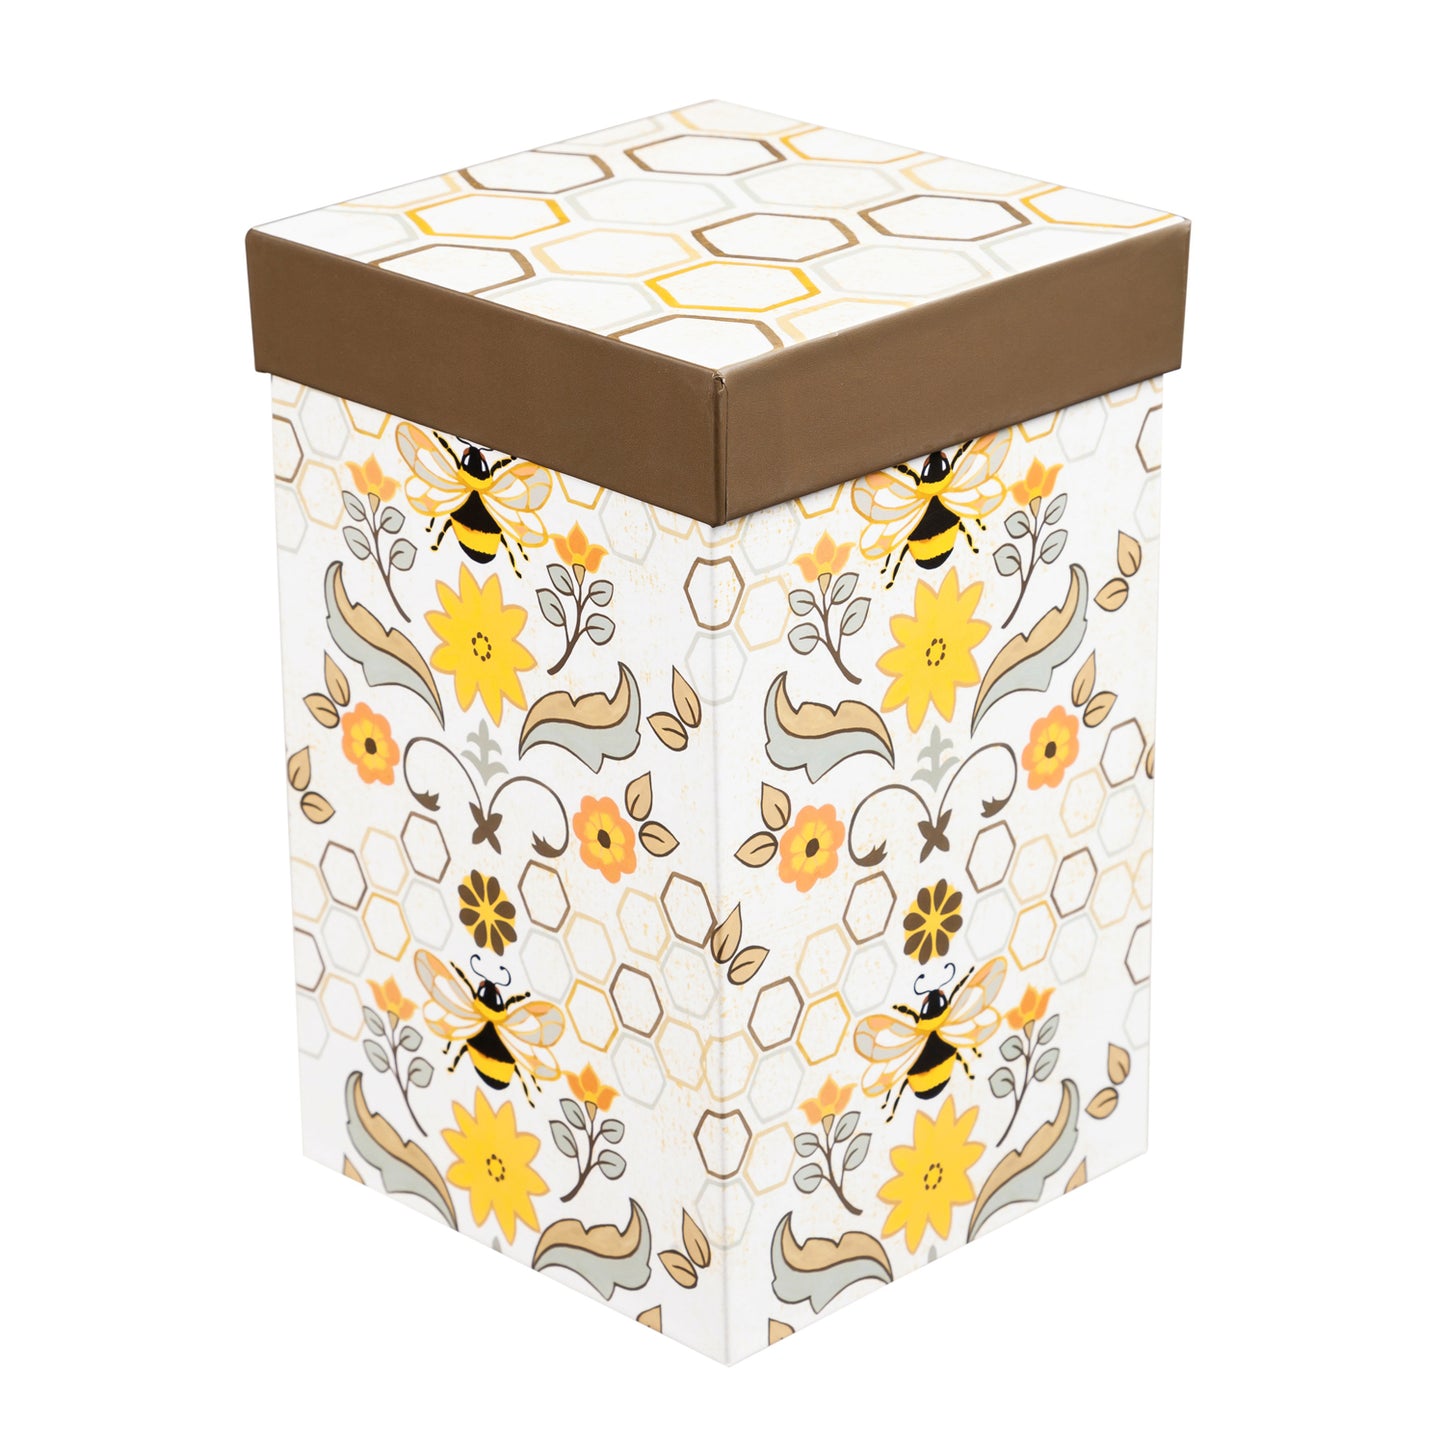 Ceramic Travel Cup w/box, 17 OZ - Honeycomb Heaven